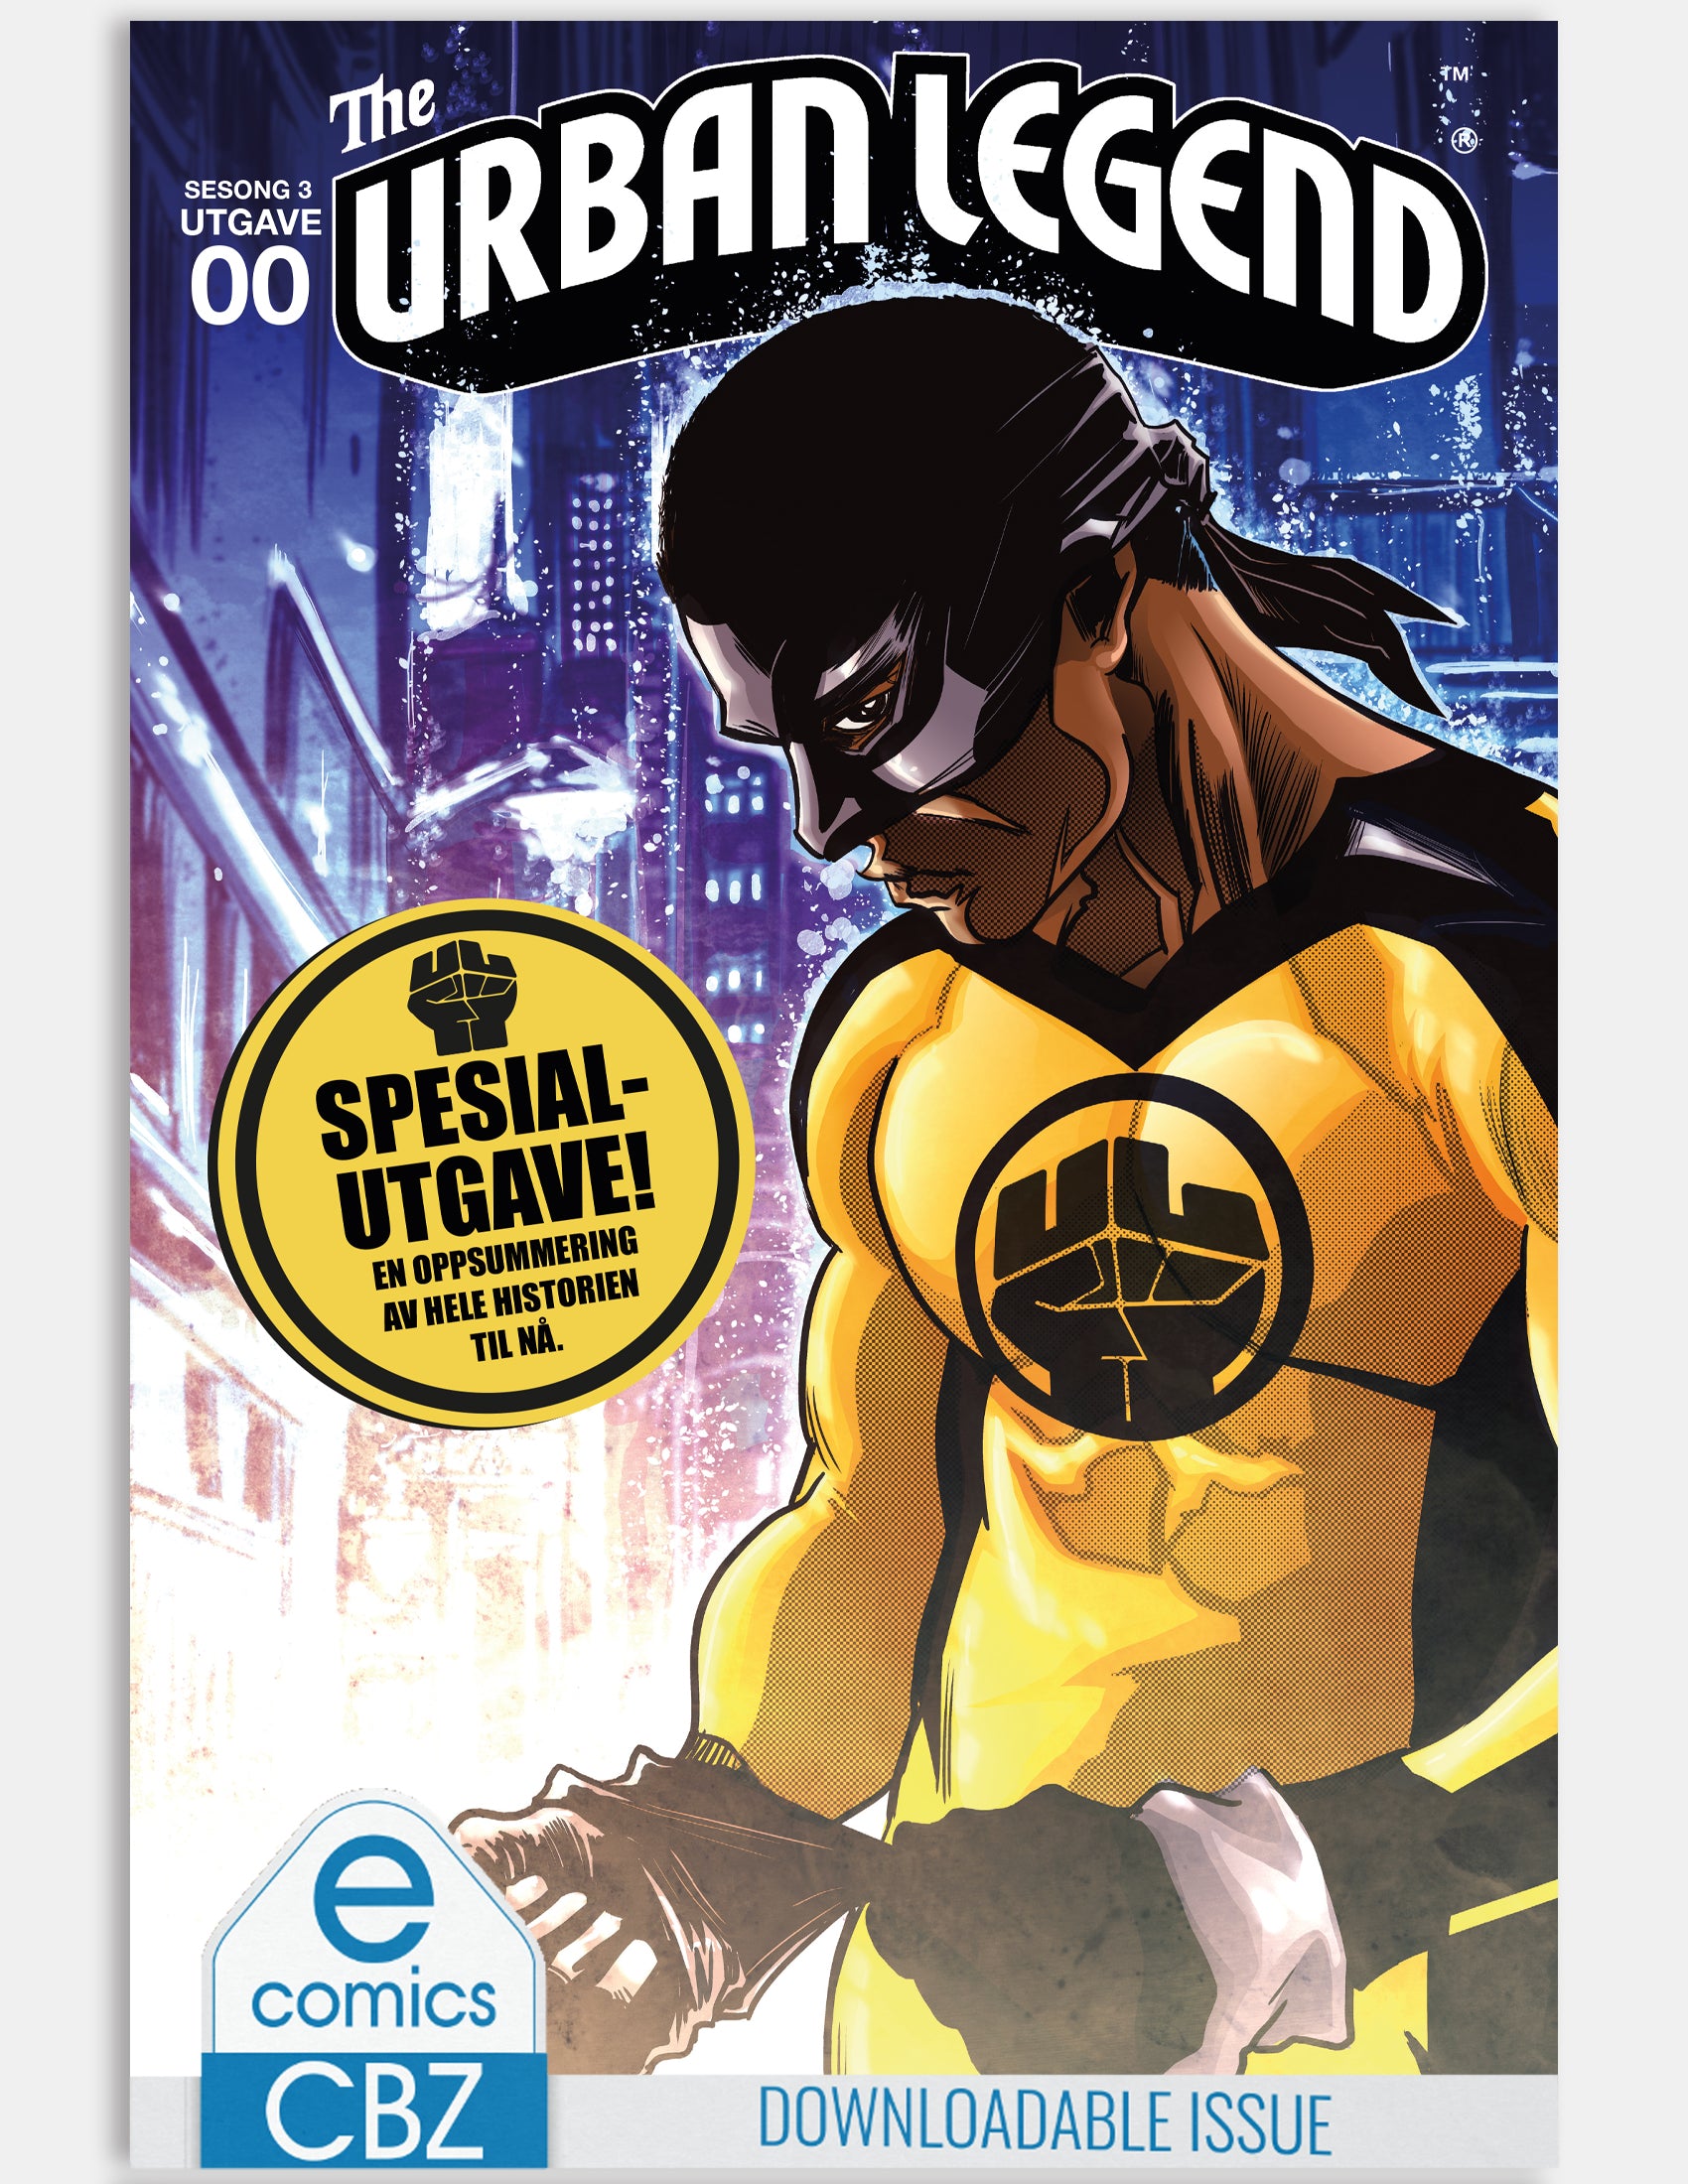 The Urban Legend - Who´s The Urban Legend? (Issue 0 - Season 3) - Digital Issue